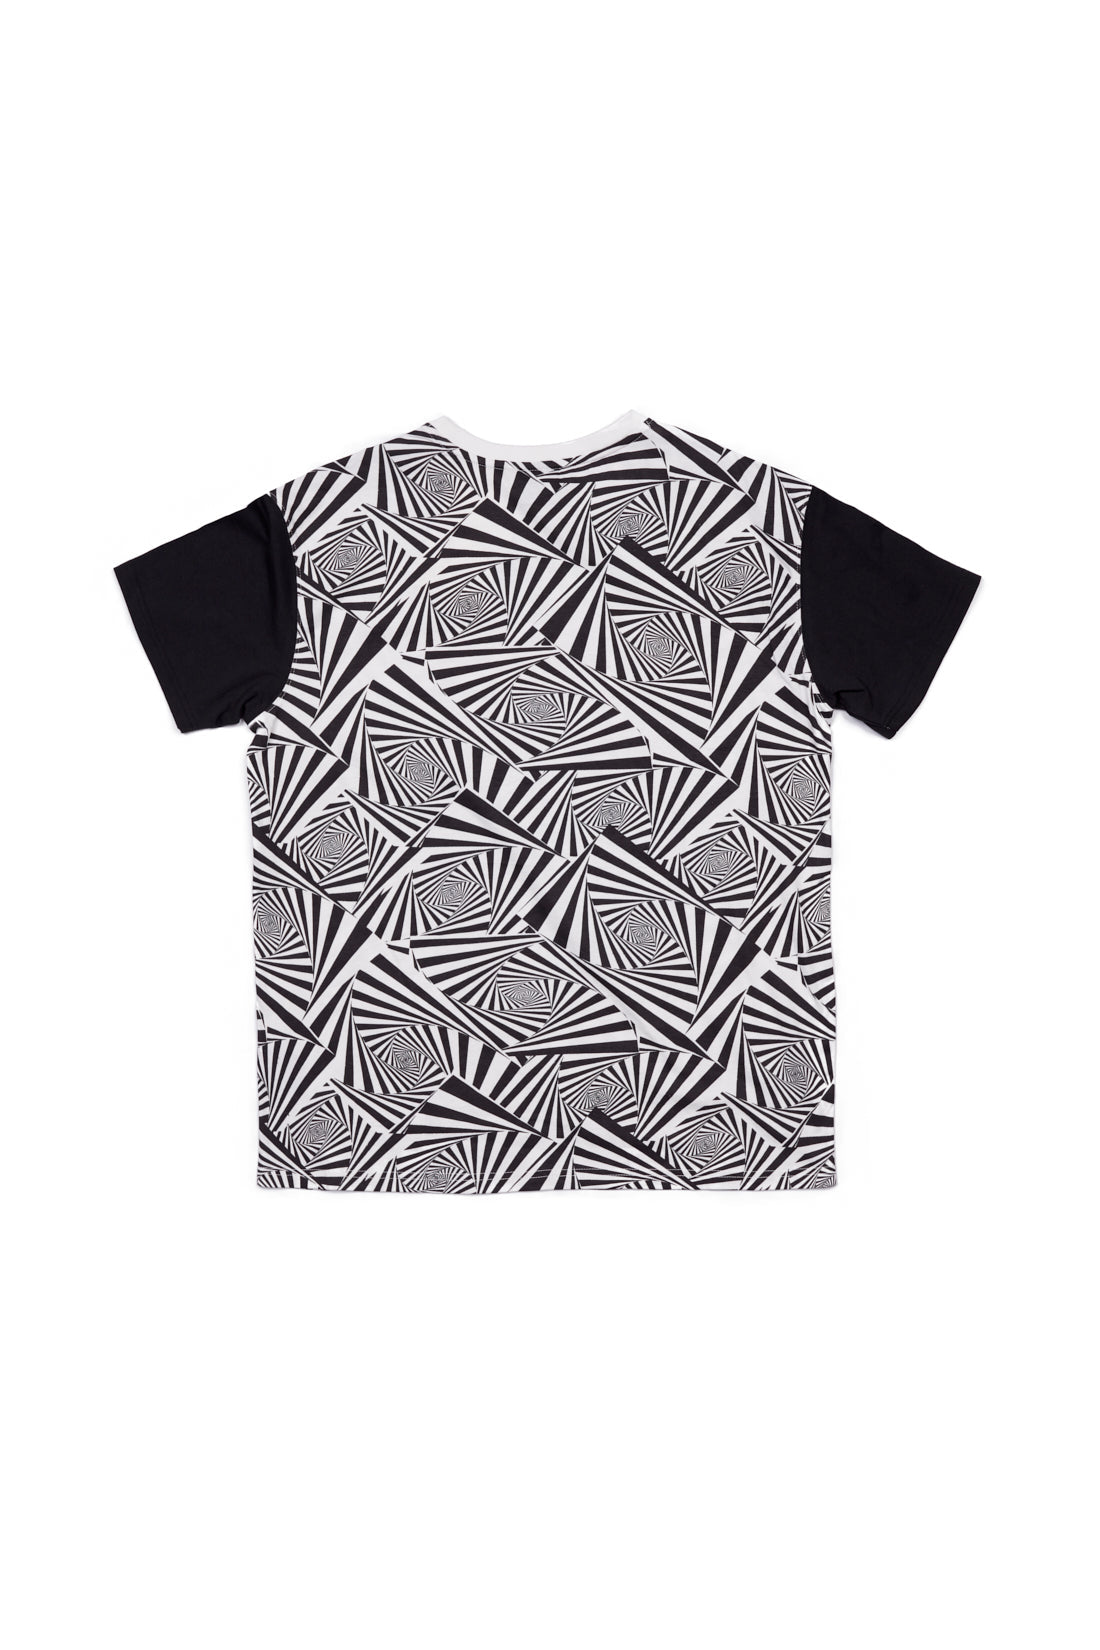 Spirals Aop Logo T-Shirt - ivory/Black - DENIM SOCIETY™